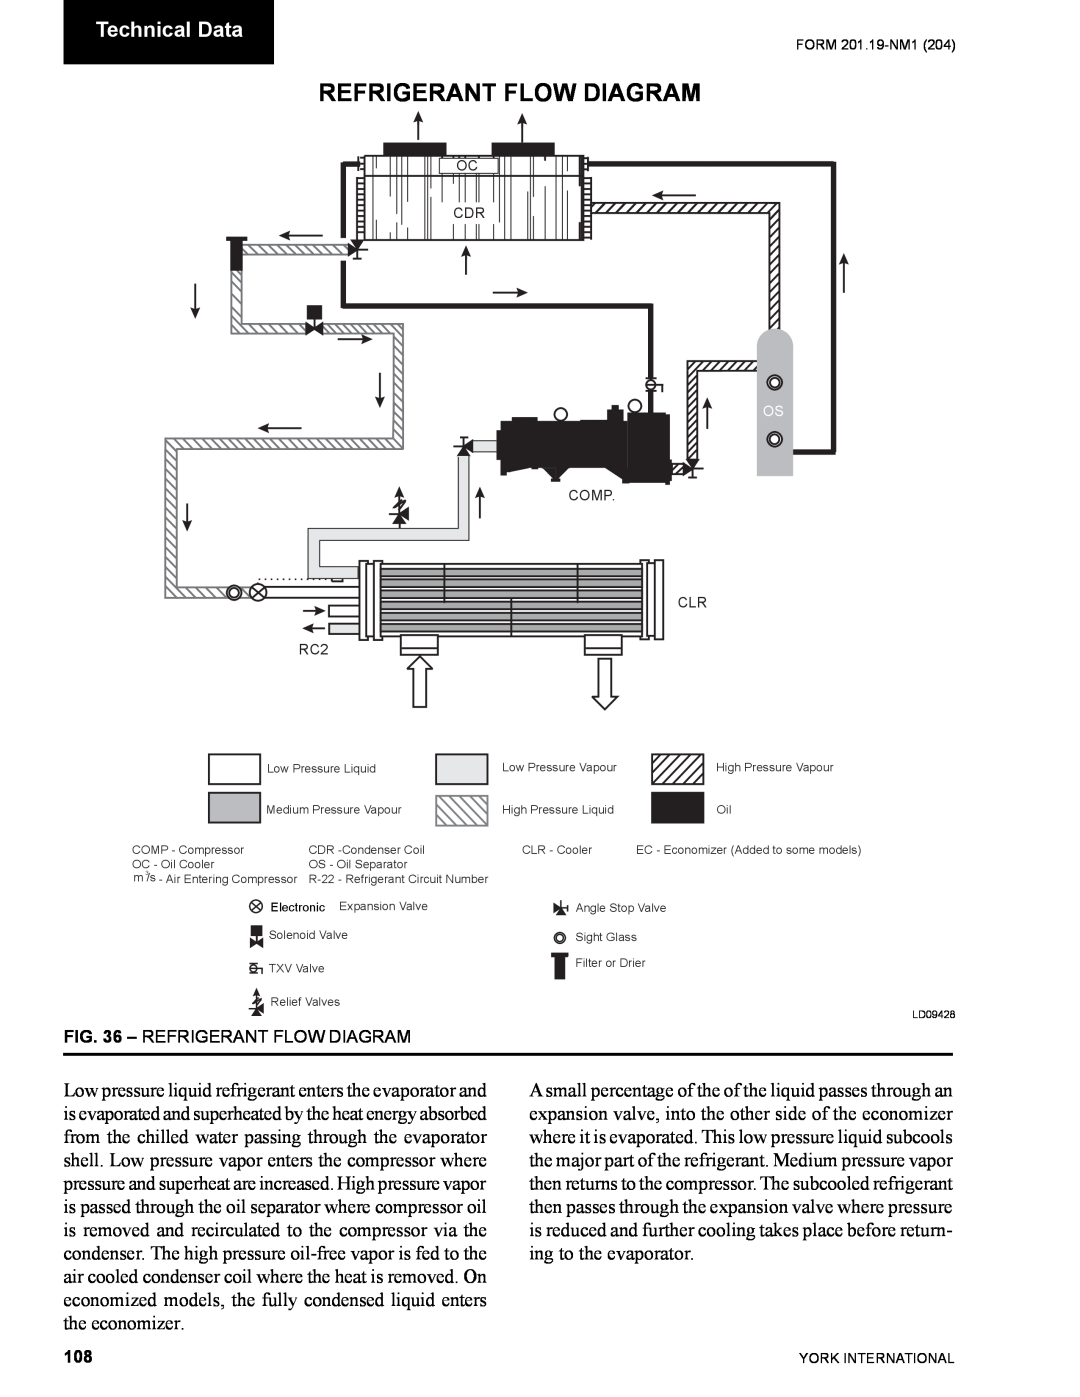 York YCAS0130 manual Refrigerant Flow Diagram, Technical Data 